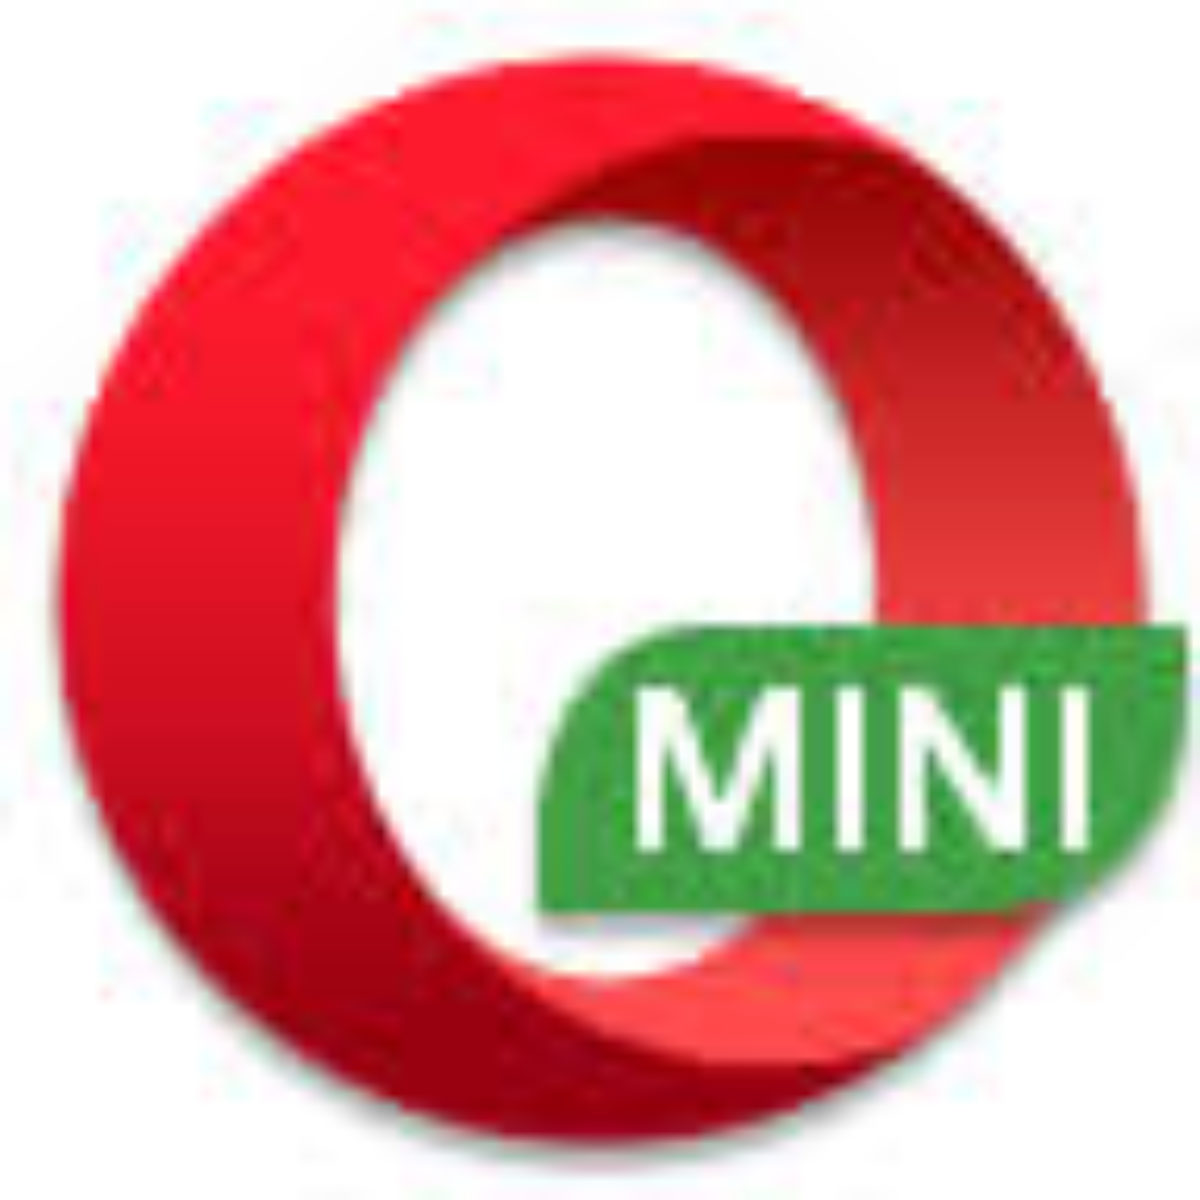 Opera Mini Apk 54 0 2254 56148 Fur Android Herunterladen